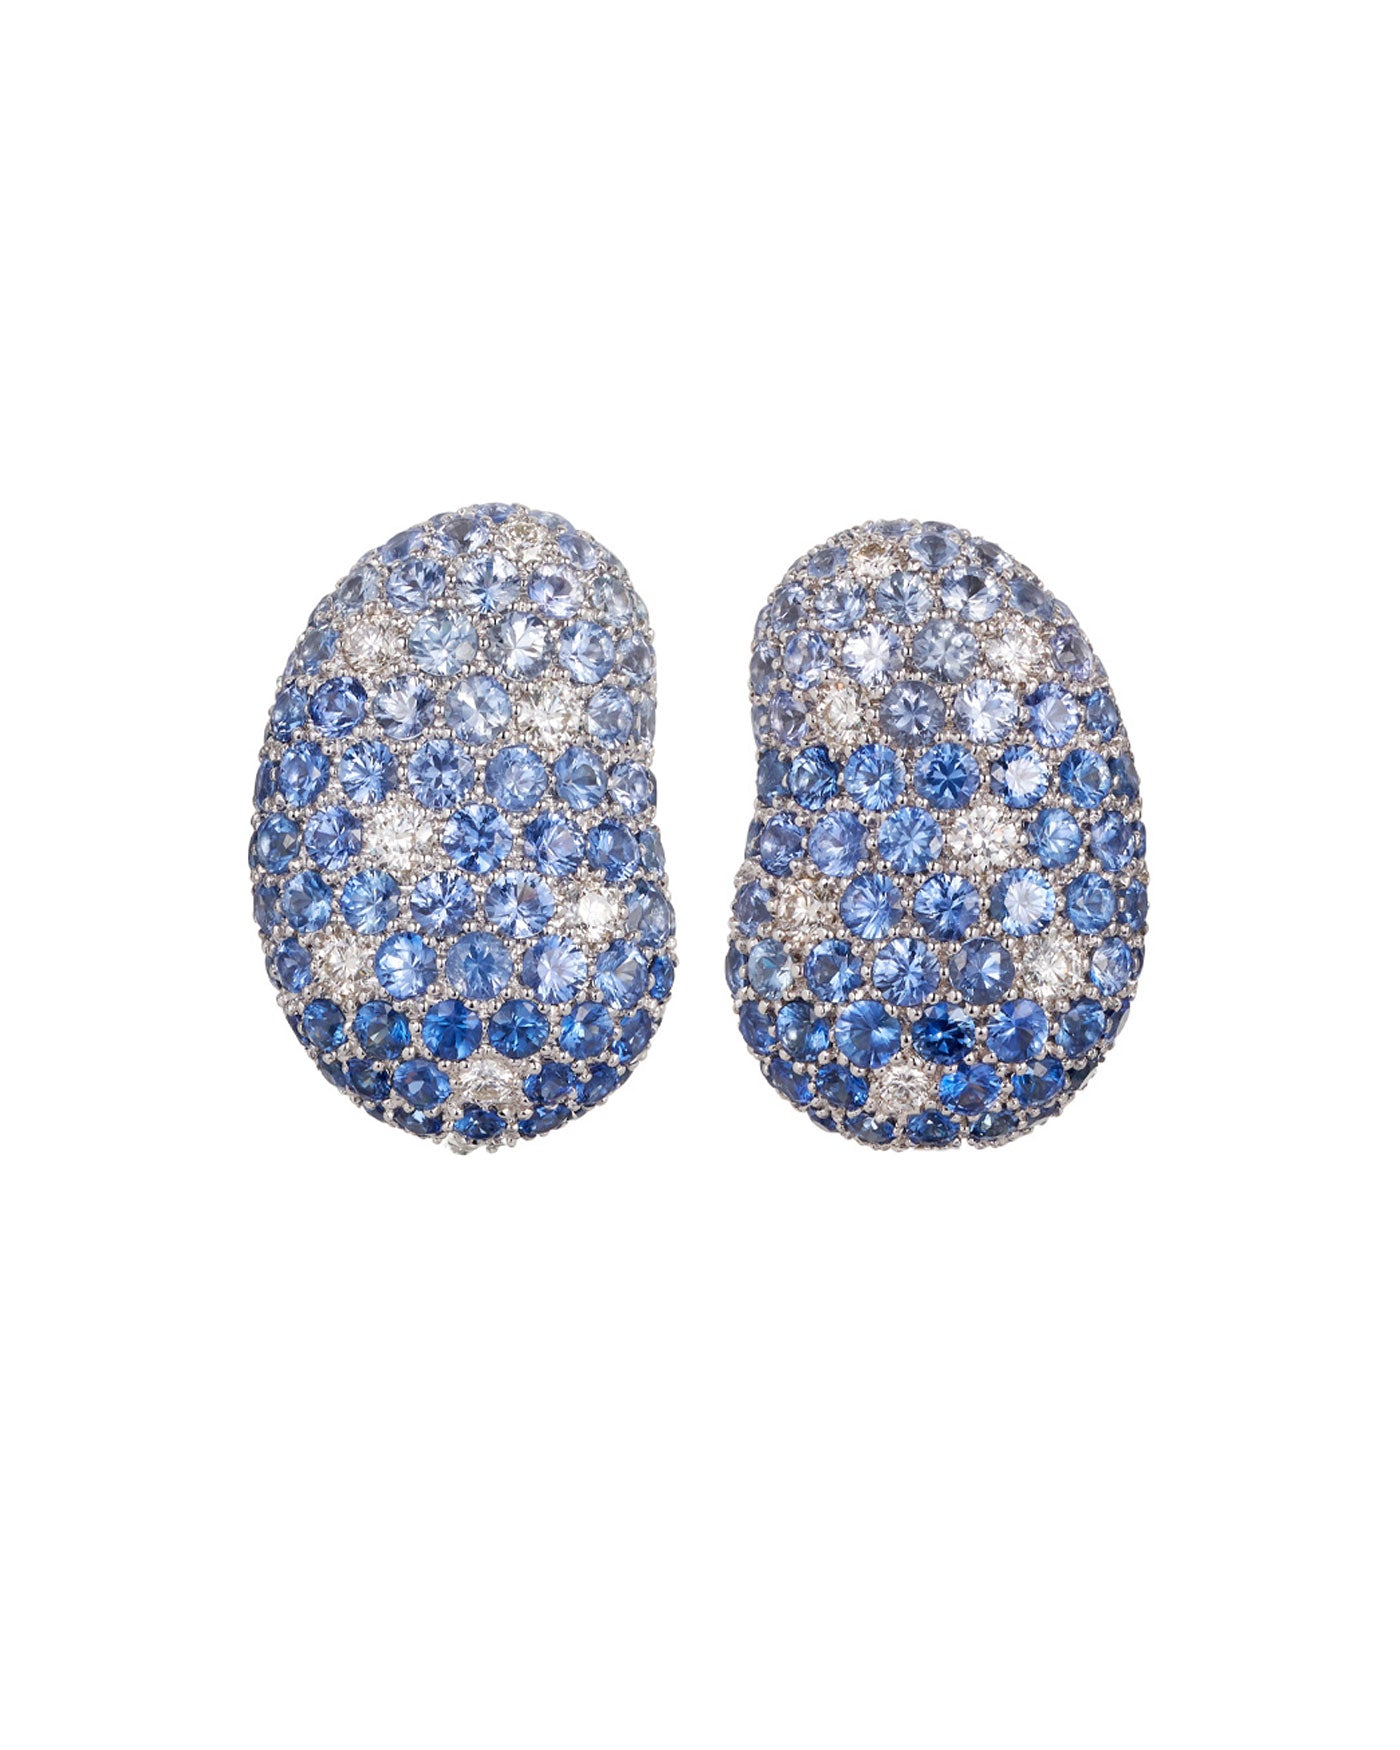 Jelly Bean Sapphire and Diamond Earrings